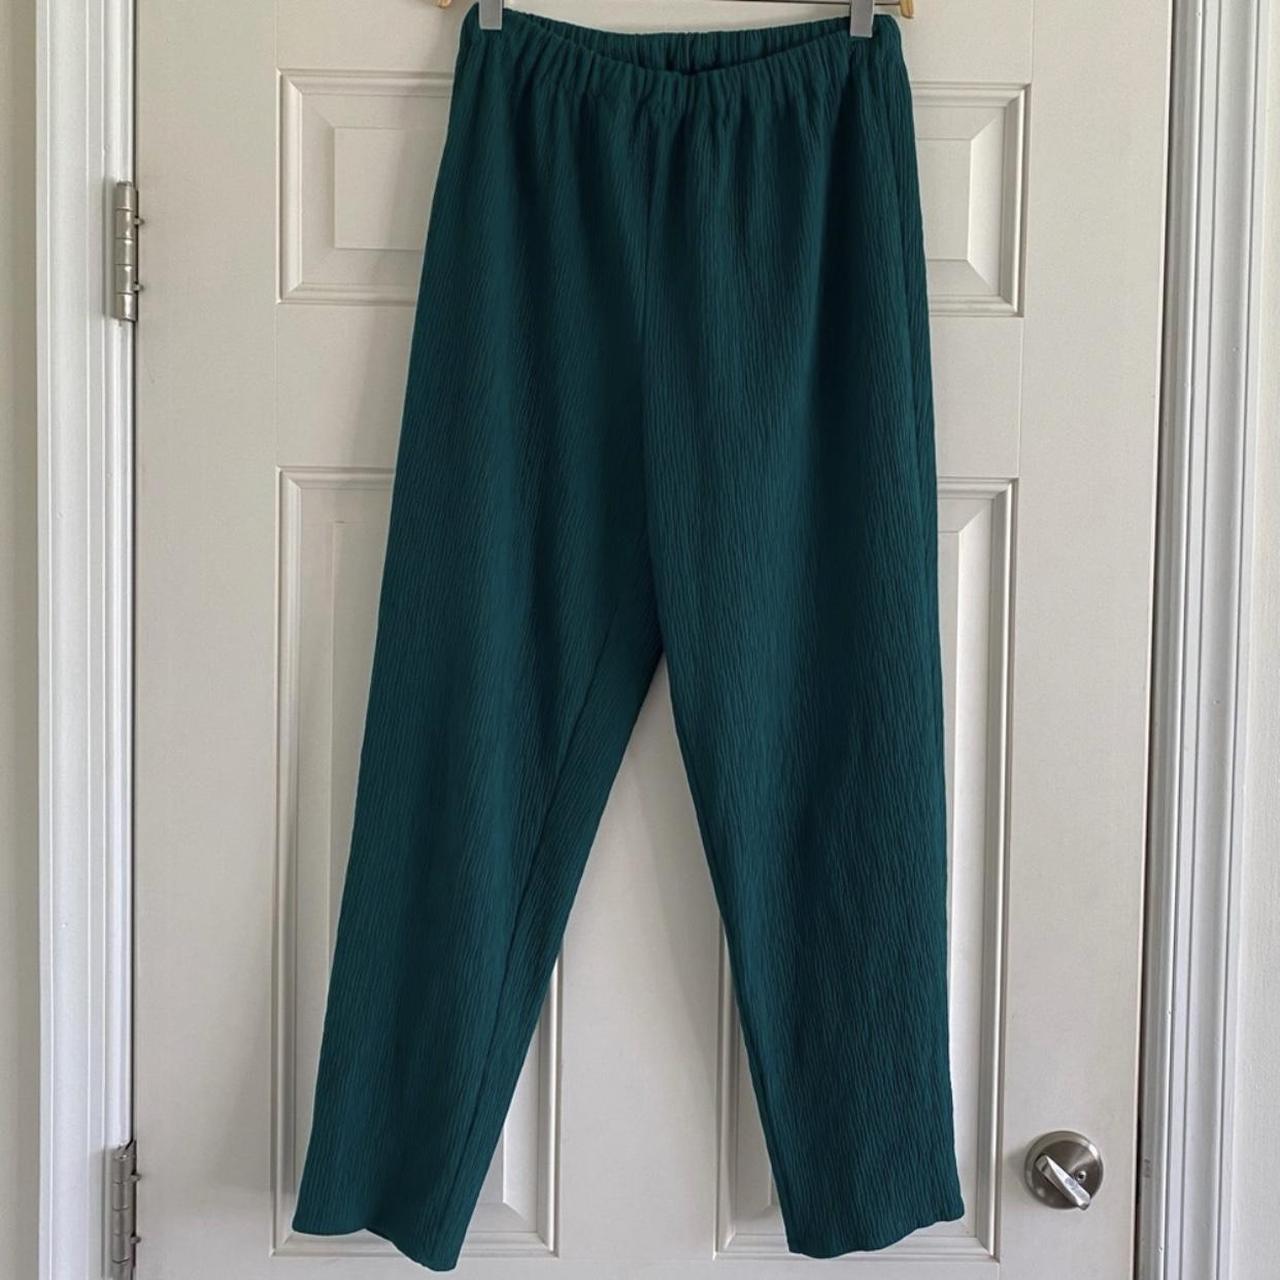 Vintage 80s Willy Dee Emerald Green Pants Trousers... - Depop